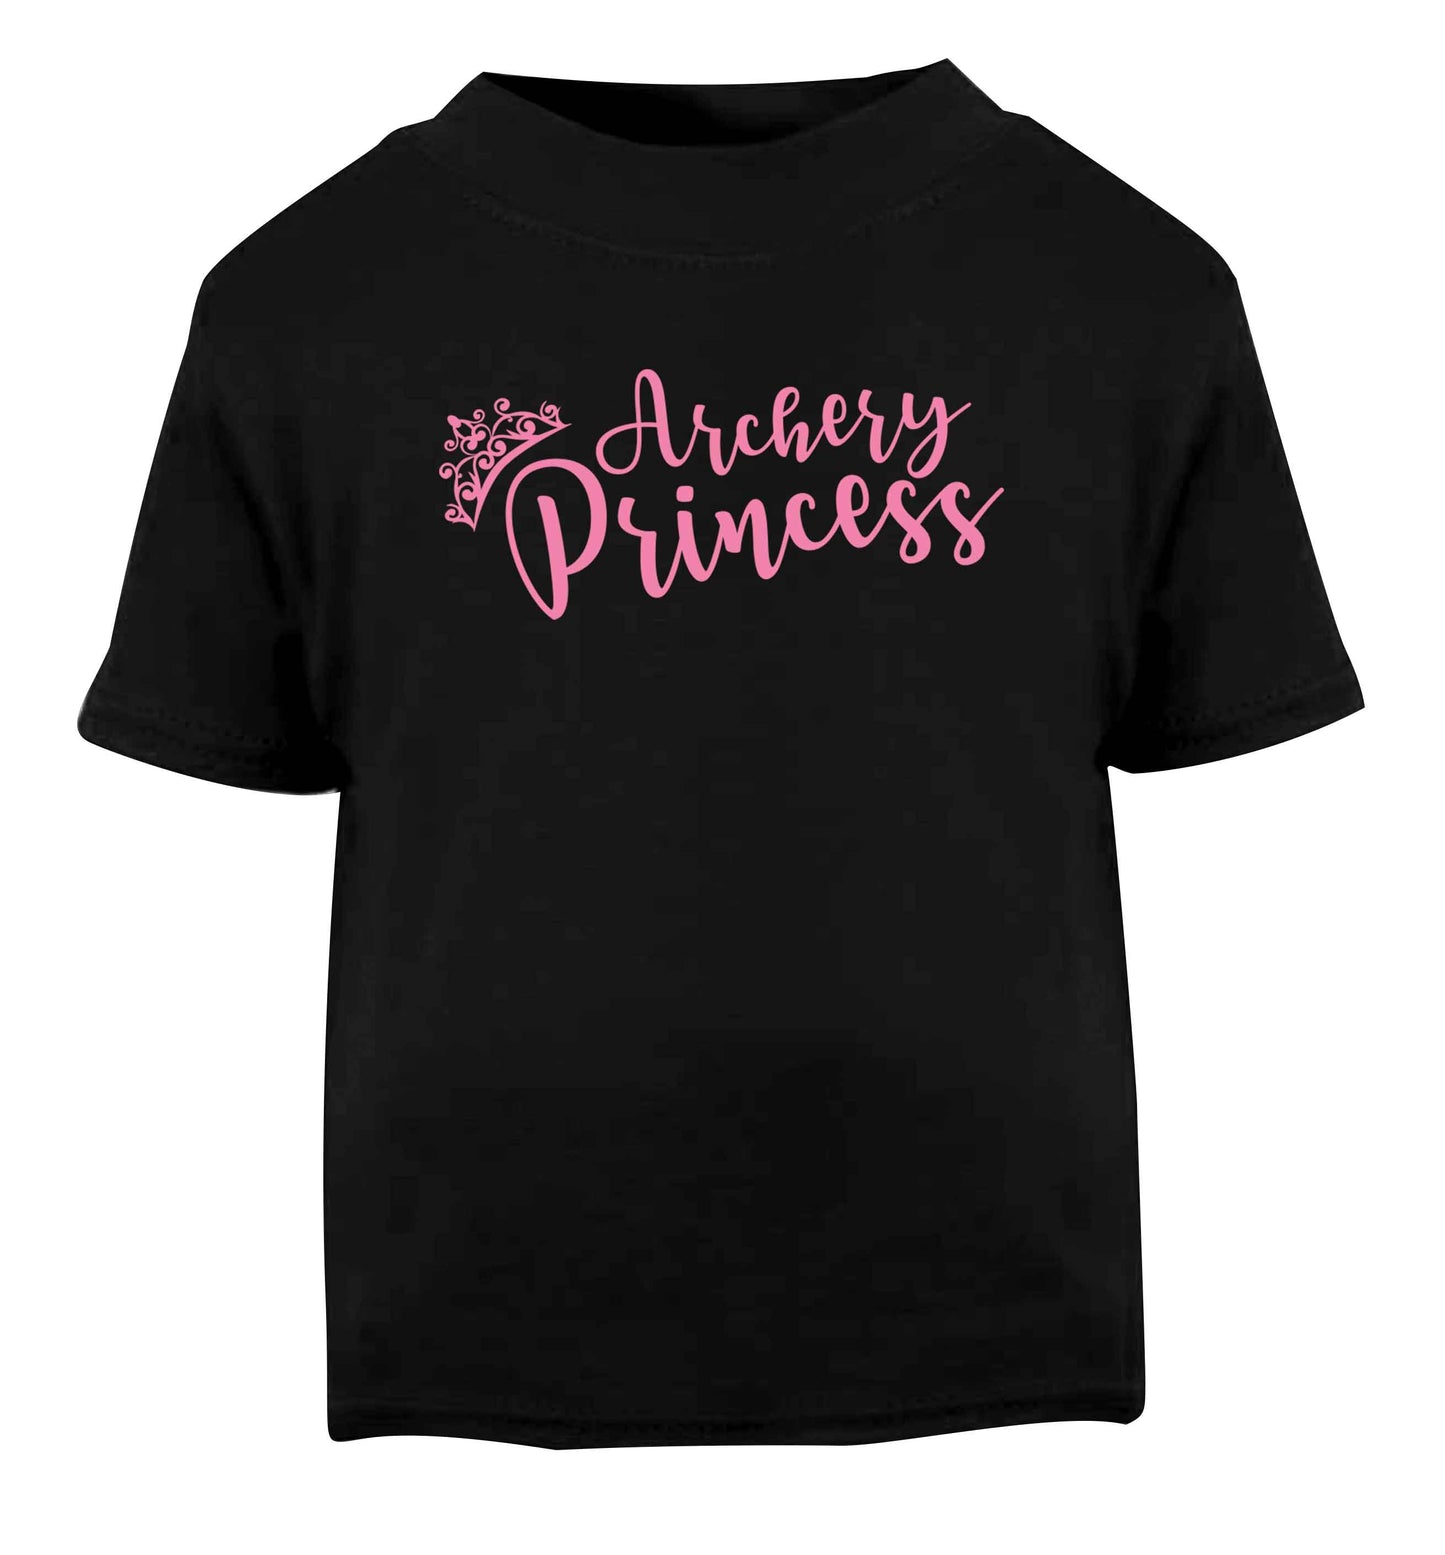 Archery princess Black Baby Toddler Tshirt 2 years